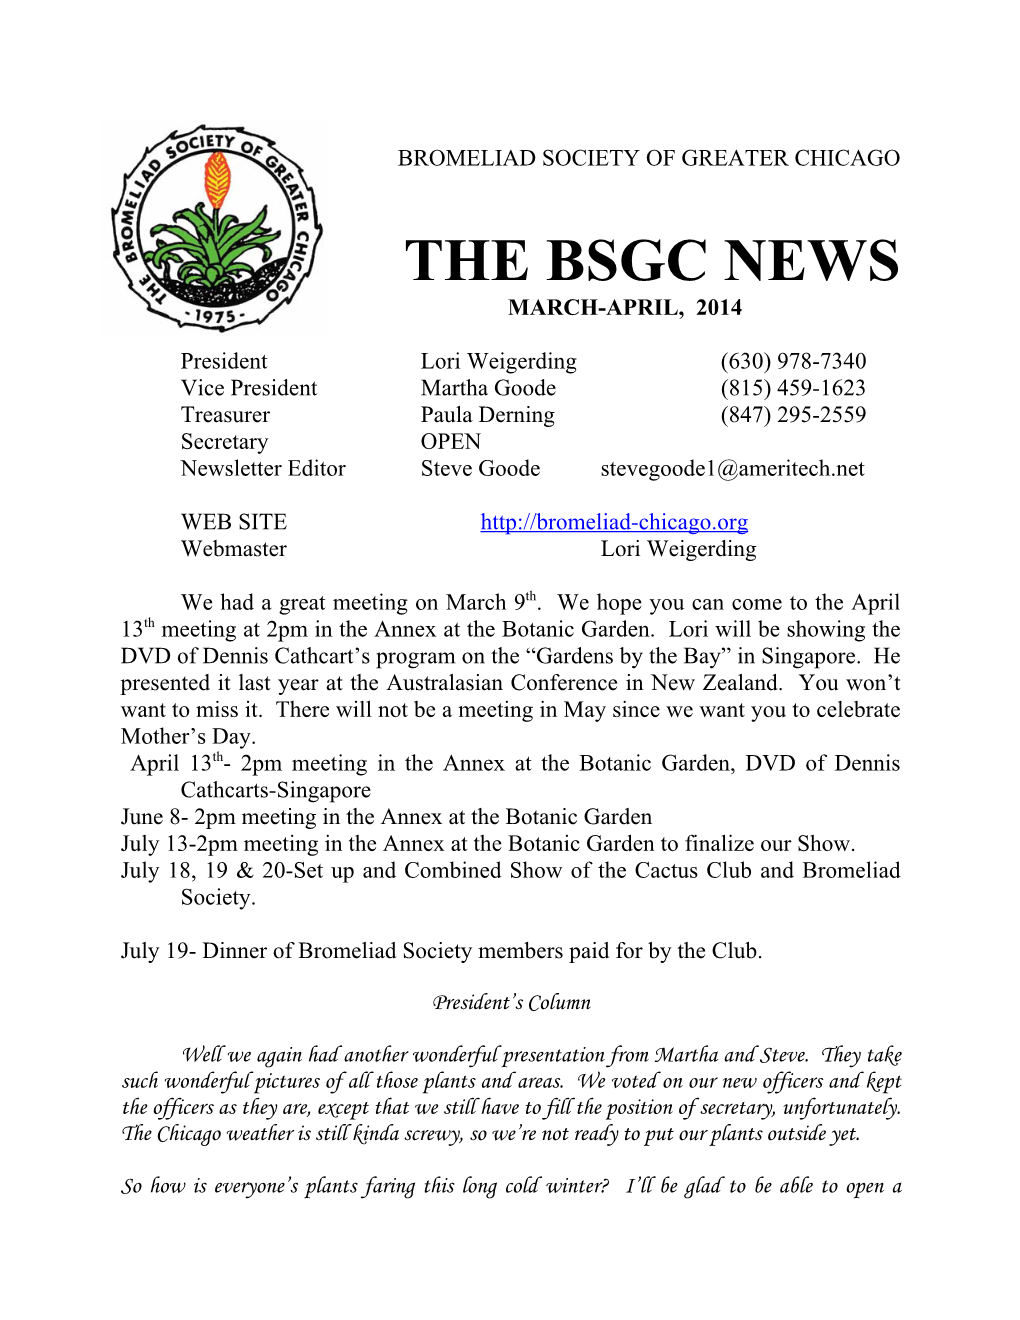 The Bsgc News March-April, 2014